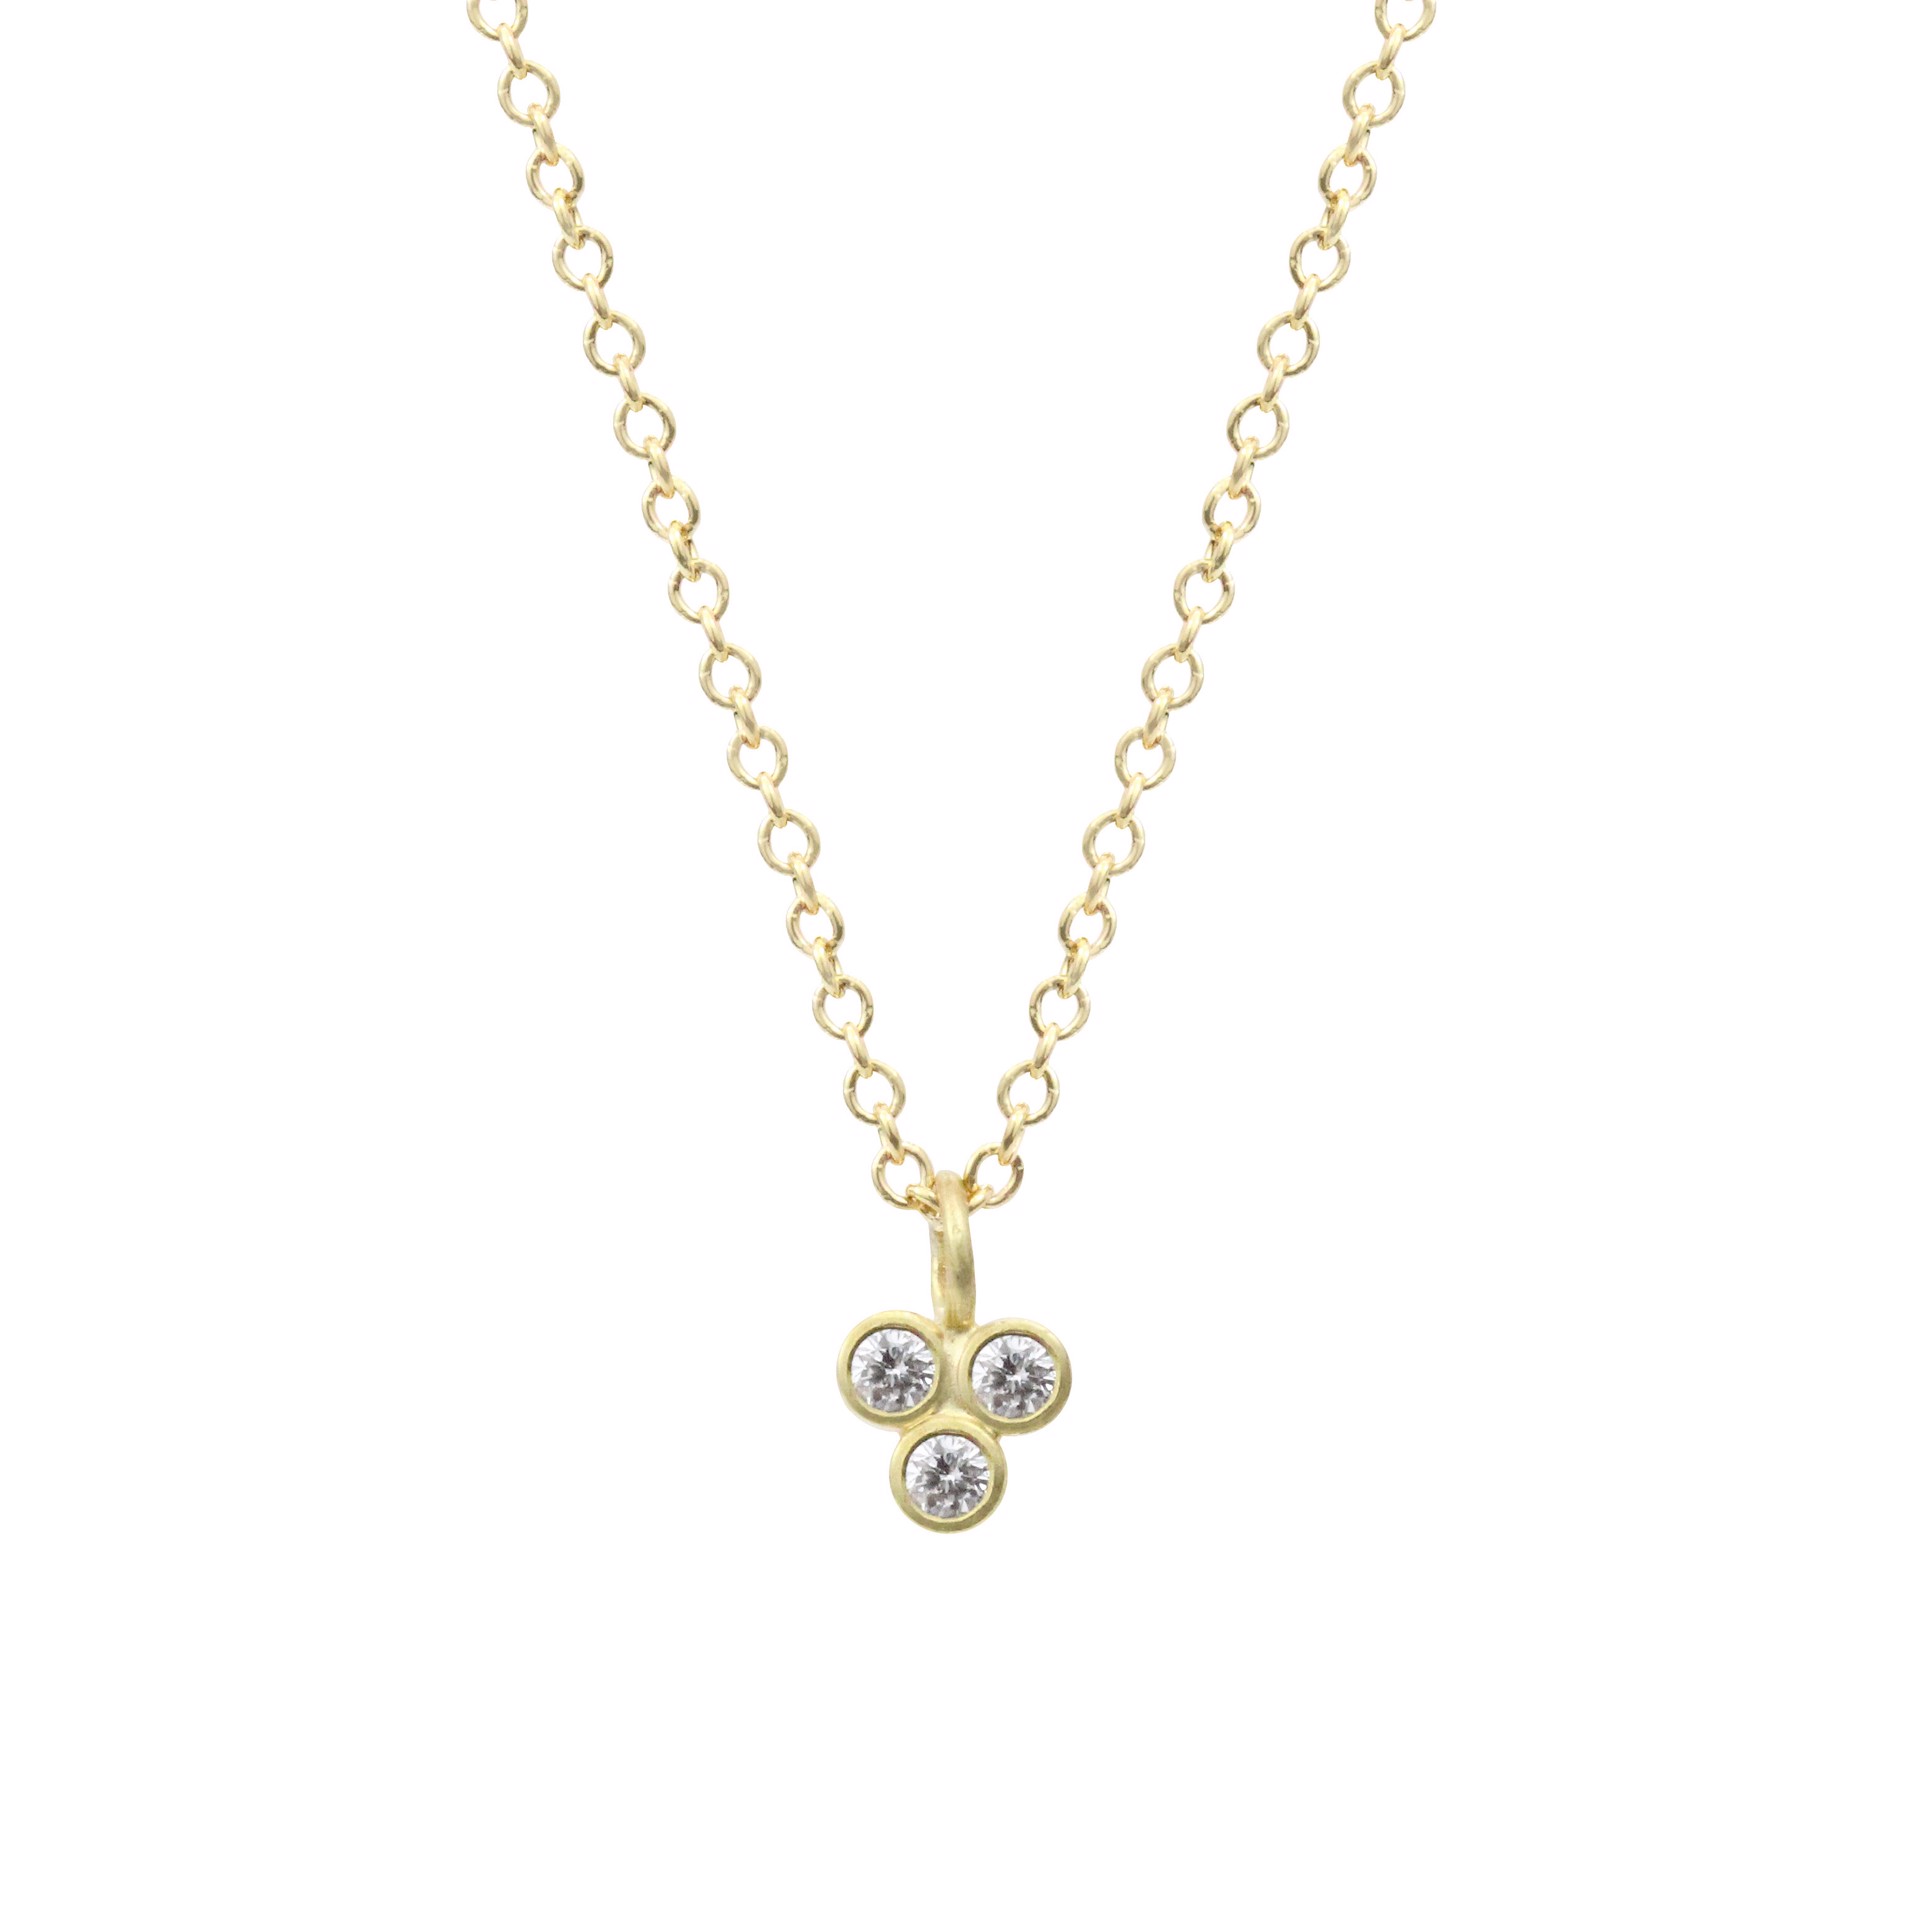 Tiny Trio Diamond Necklace by Leia Zumbro